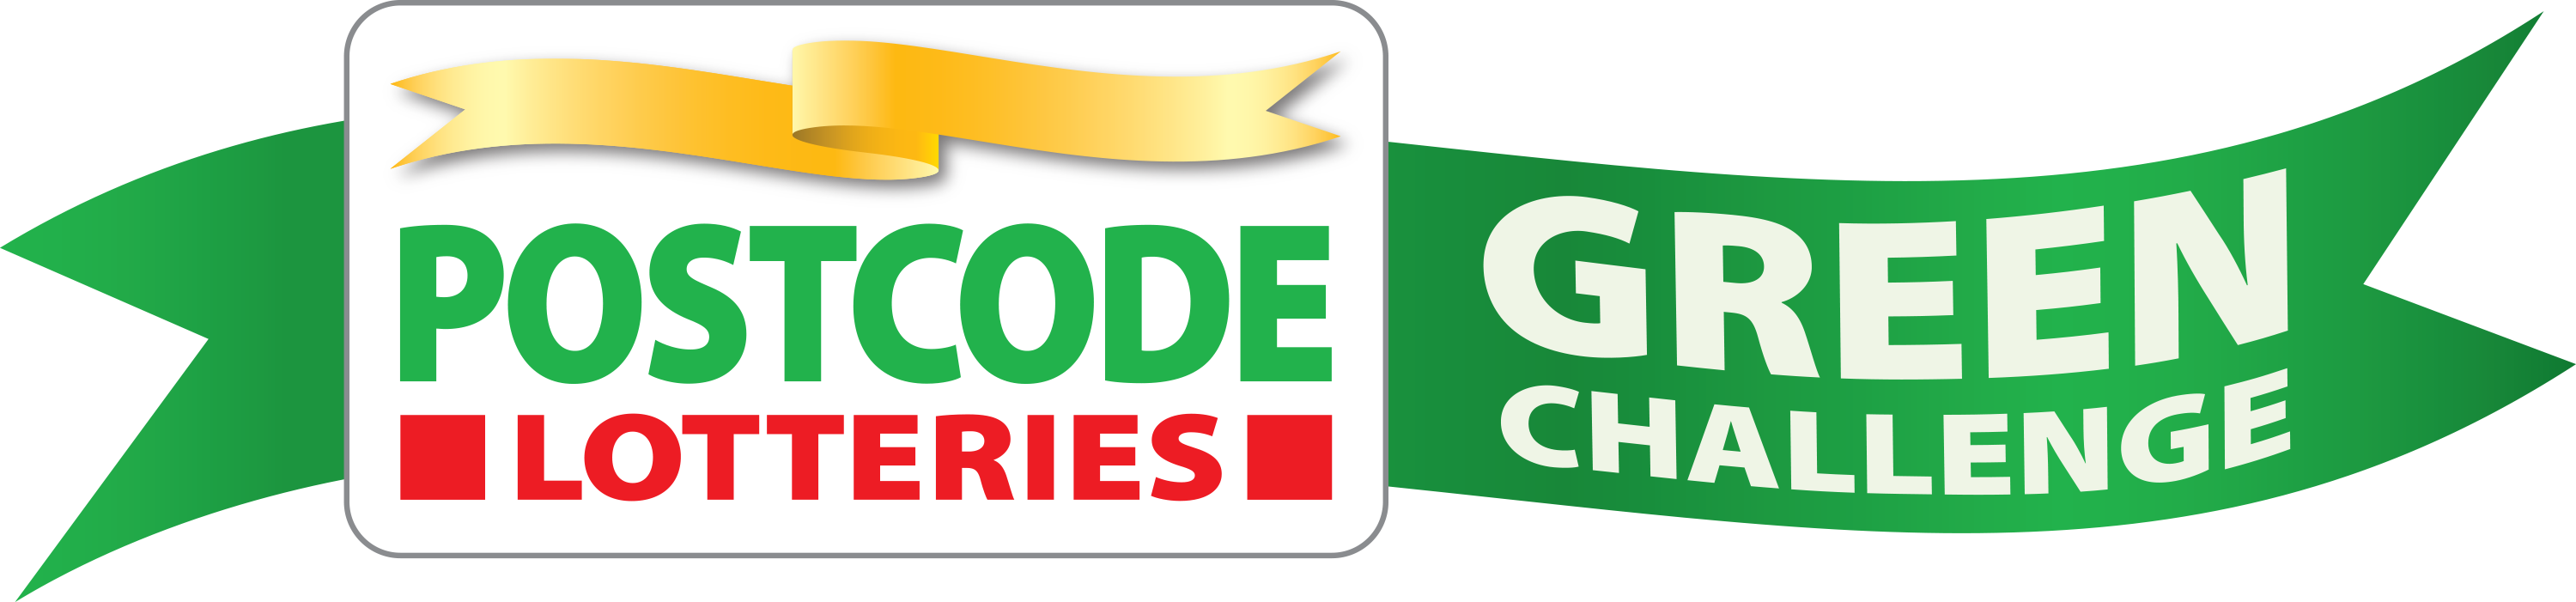 Postcode Lotteries Green Challenge Logo